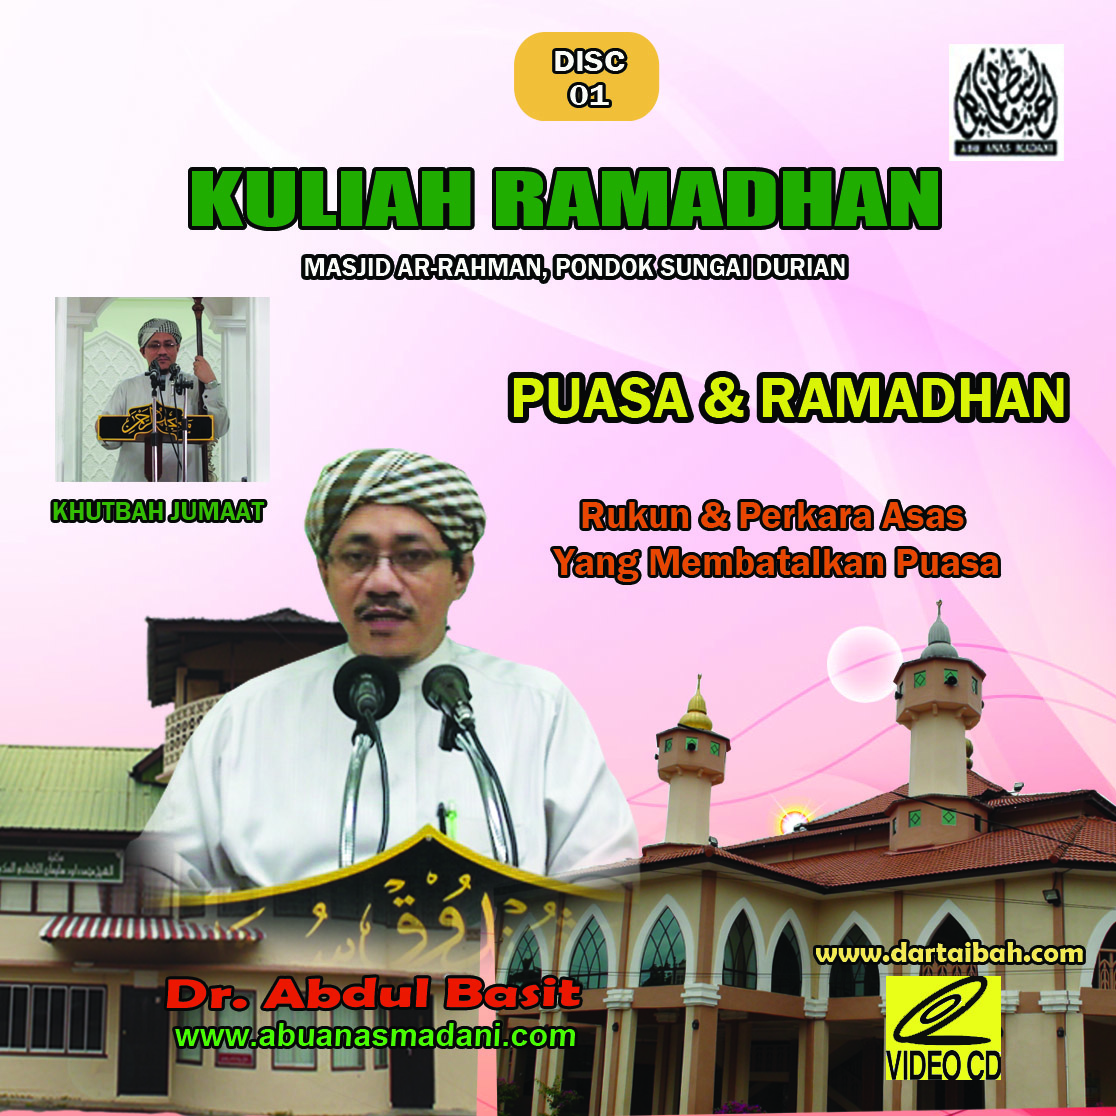 Abu Anas Madani: Ramadhan & Puasa; Kelebihan, Hikmah 